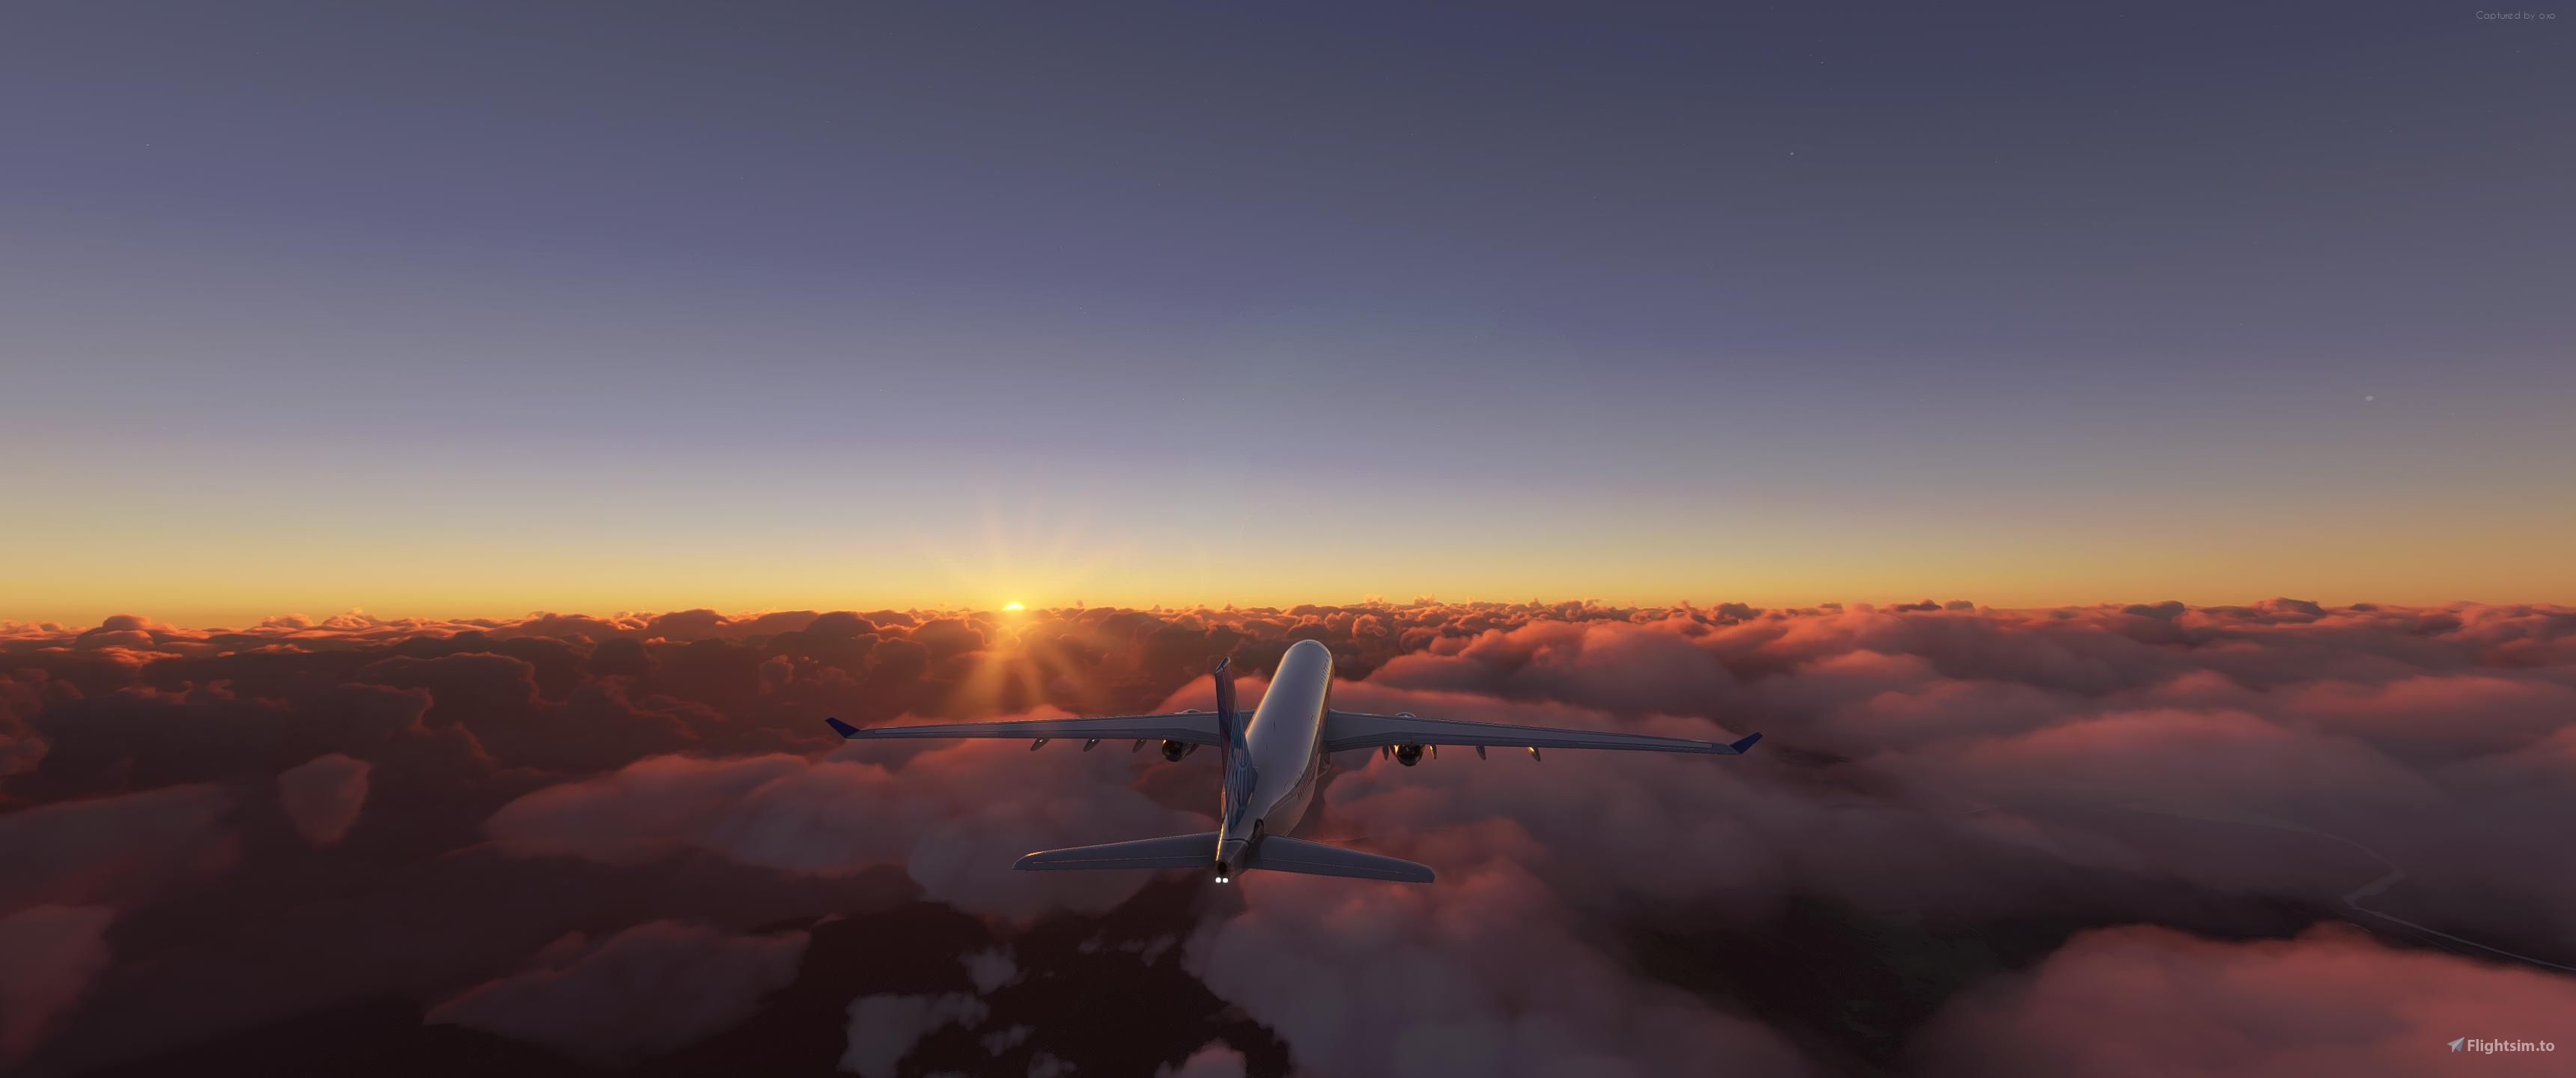 iphone xs max microsoft flight simulator background